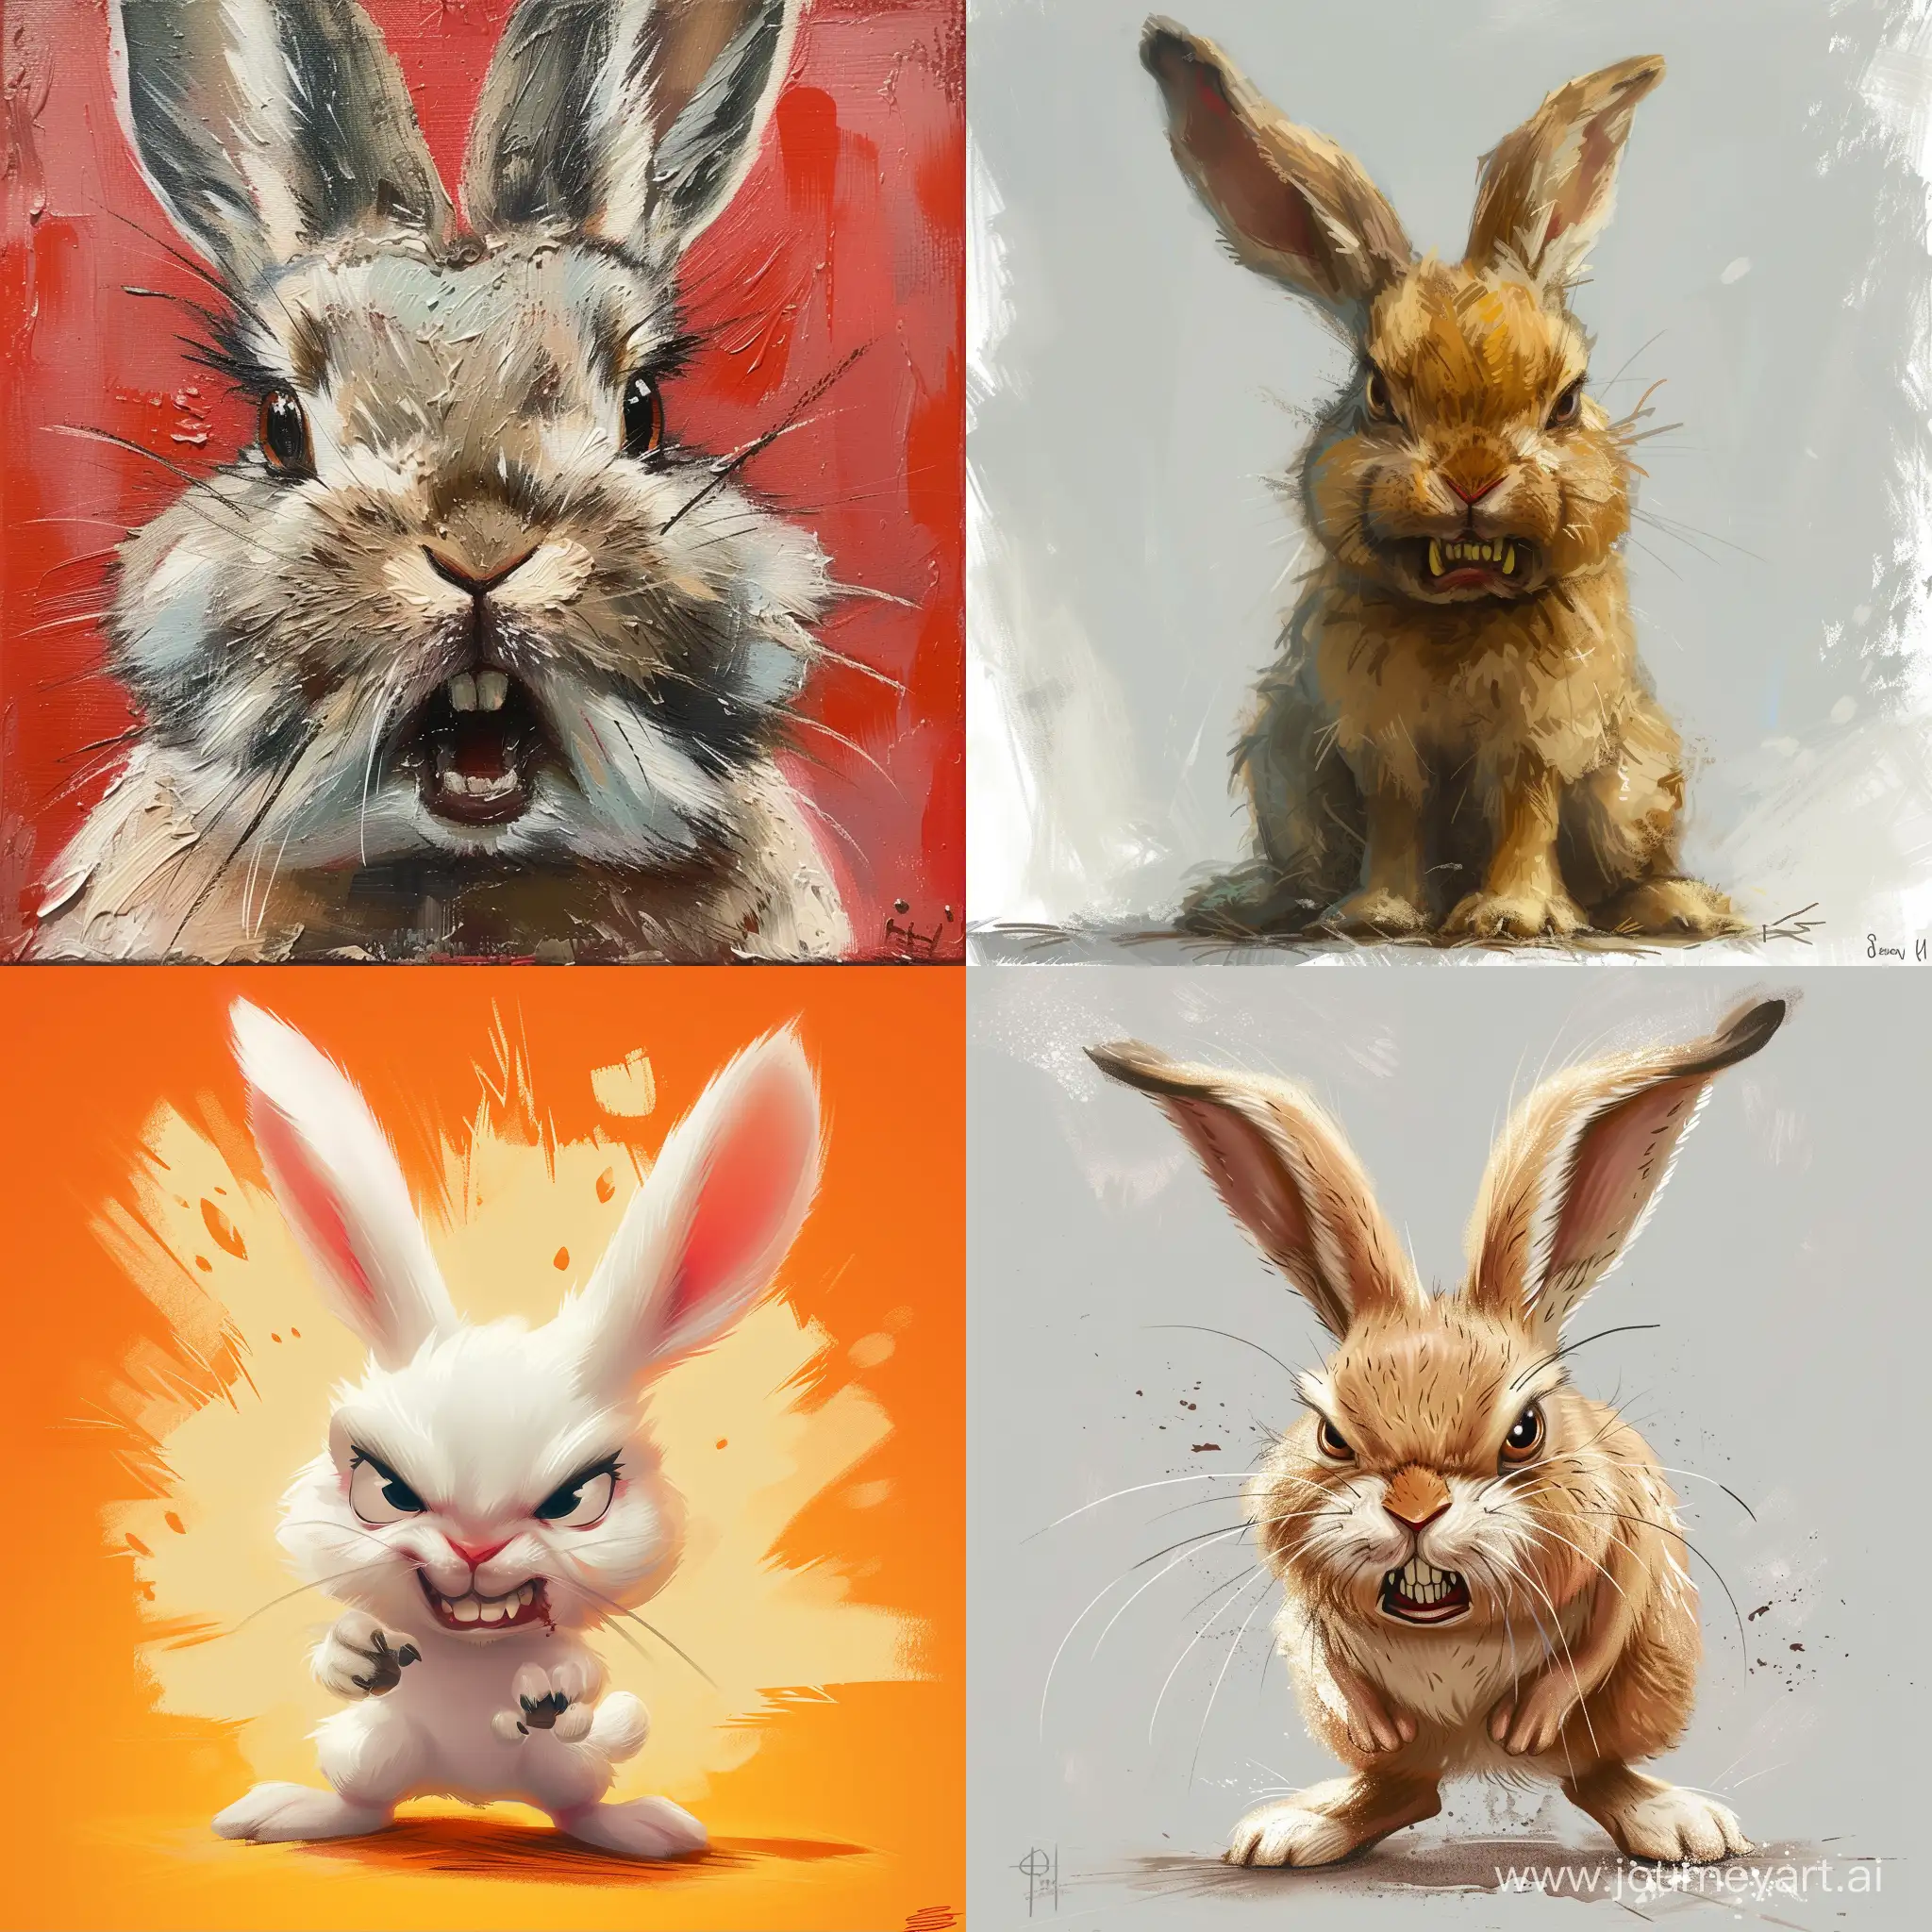 Furious-Rabbit-in-Intense-Action-Version-6